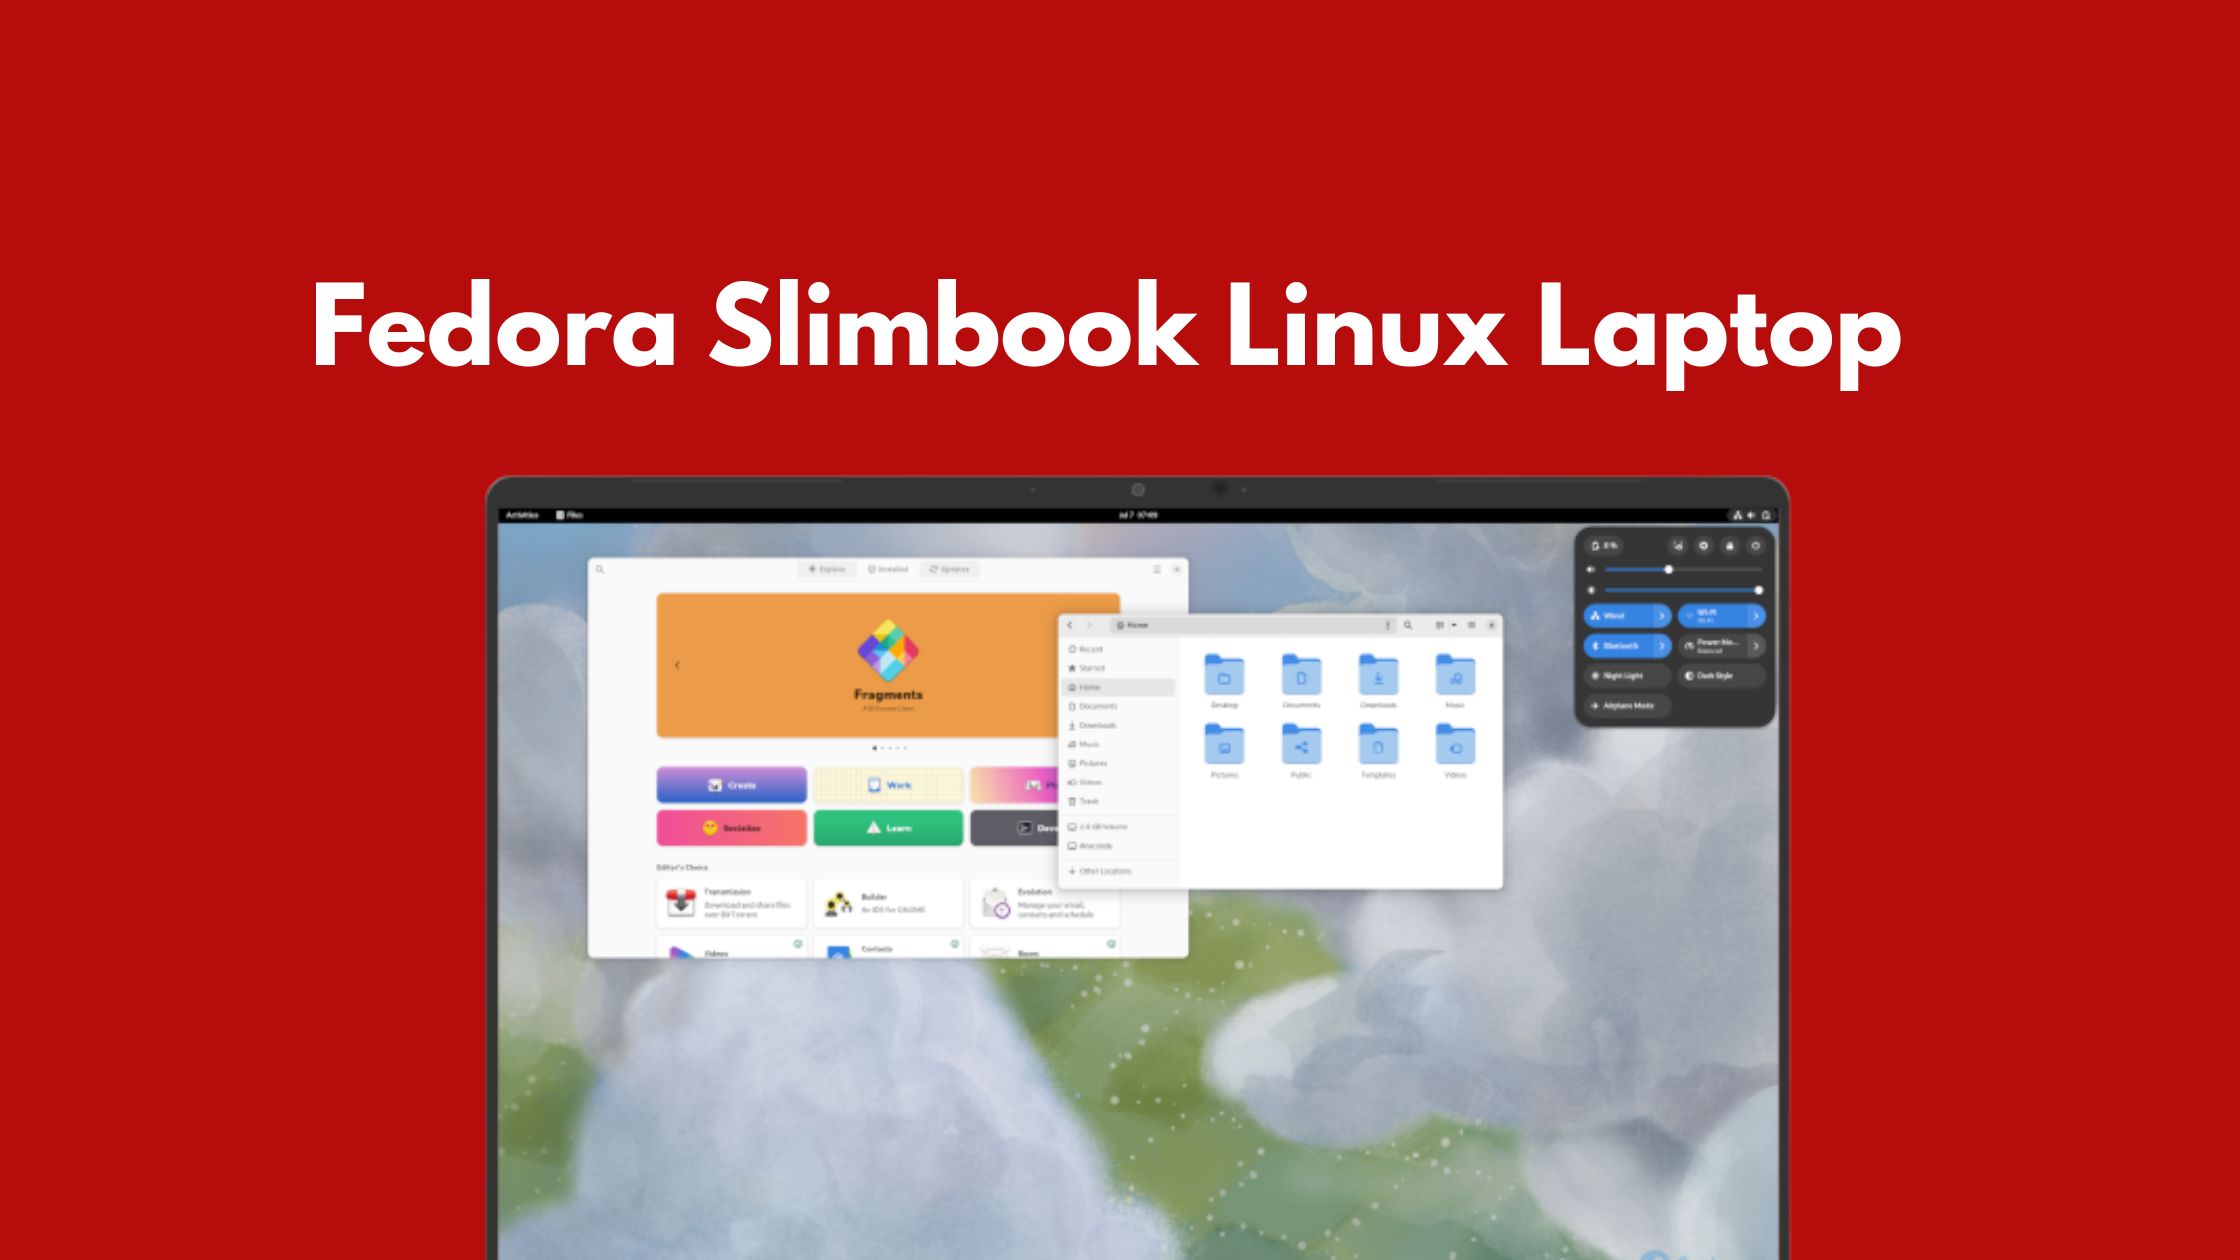 Fedora Slimbook Linux Laptop Specs